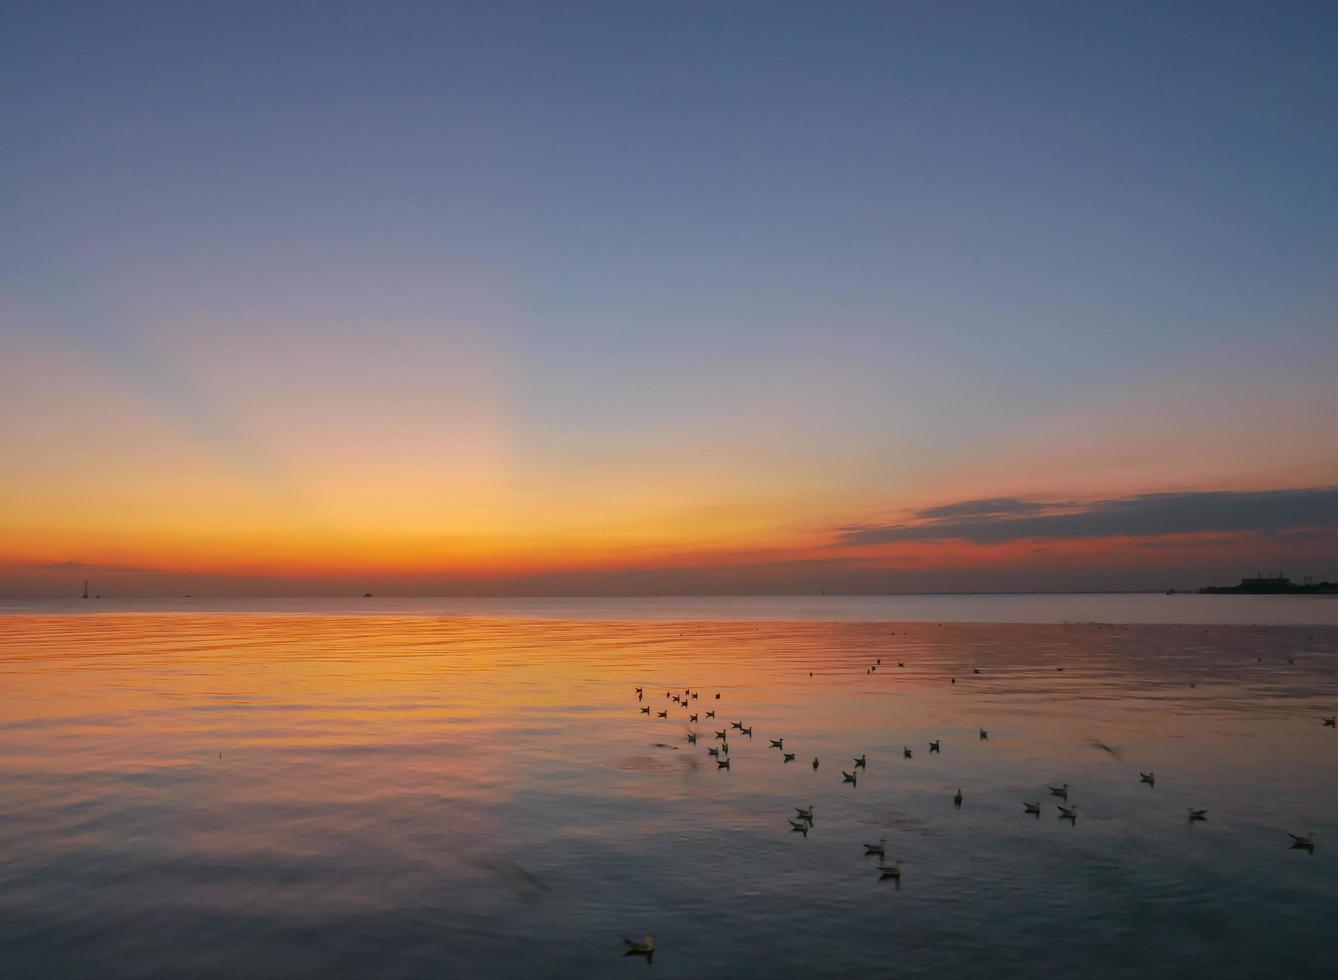 gaivotas vadear no oceano durante o pôr do sol foto